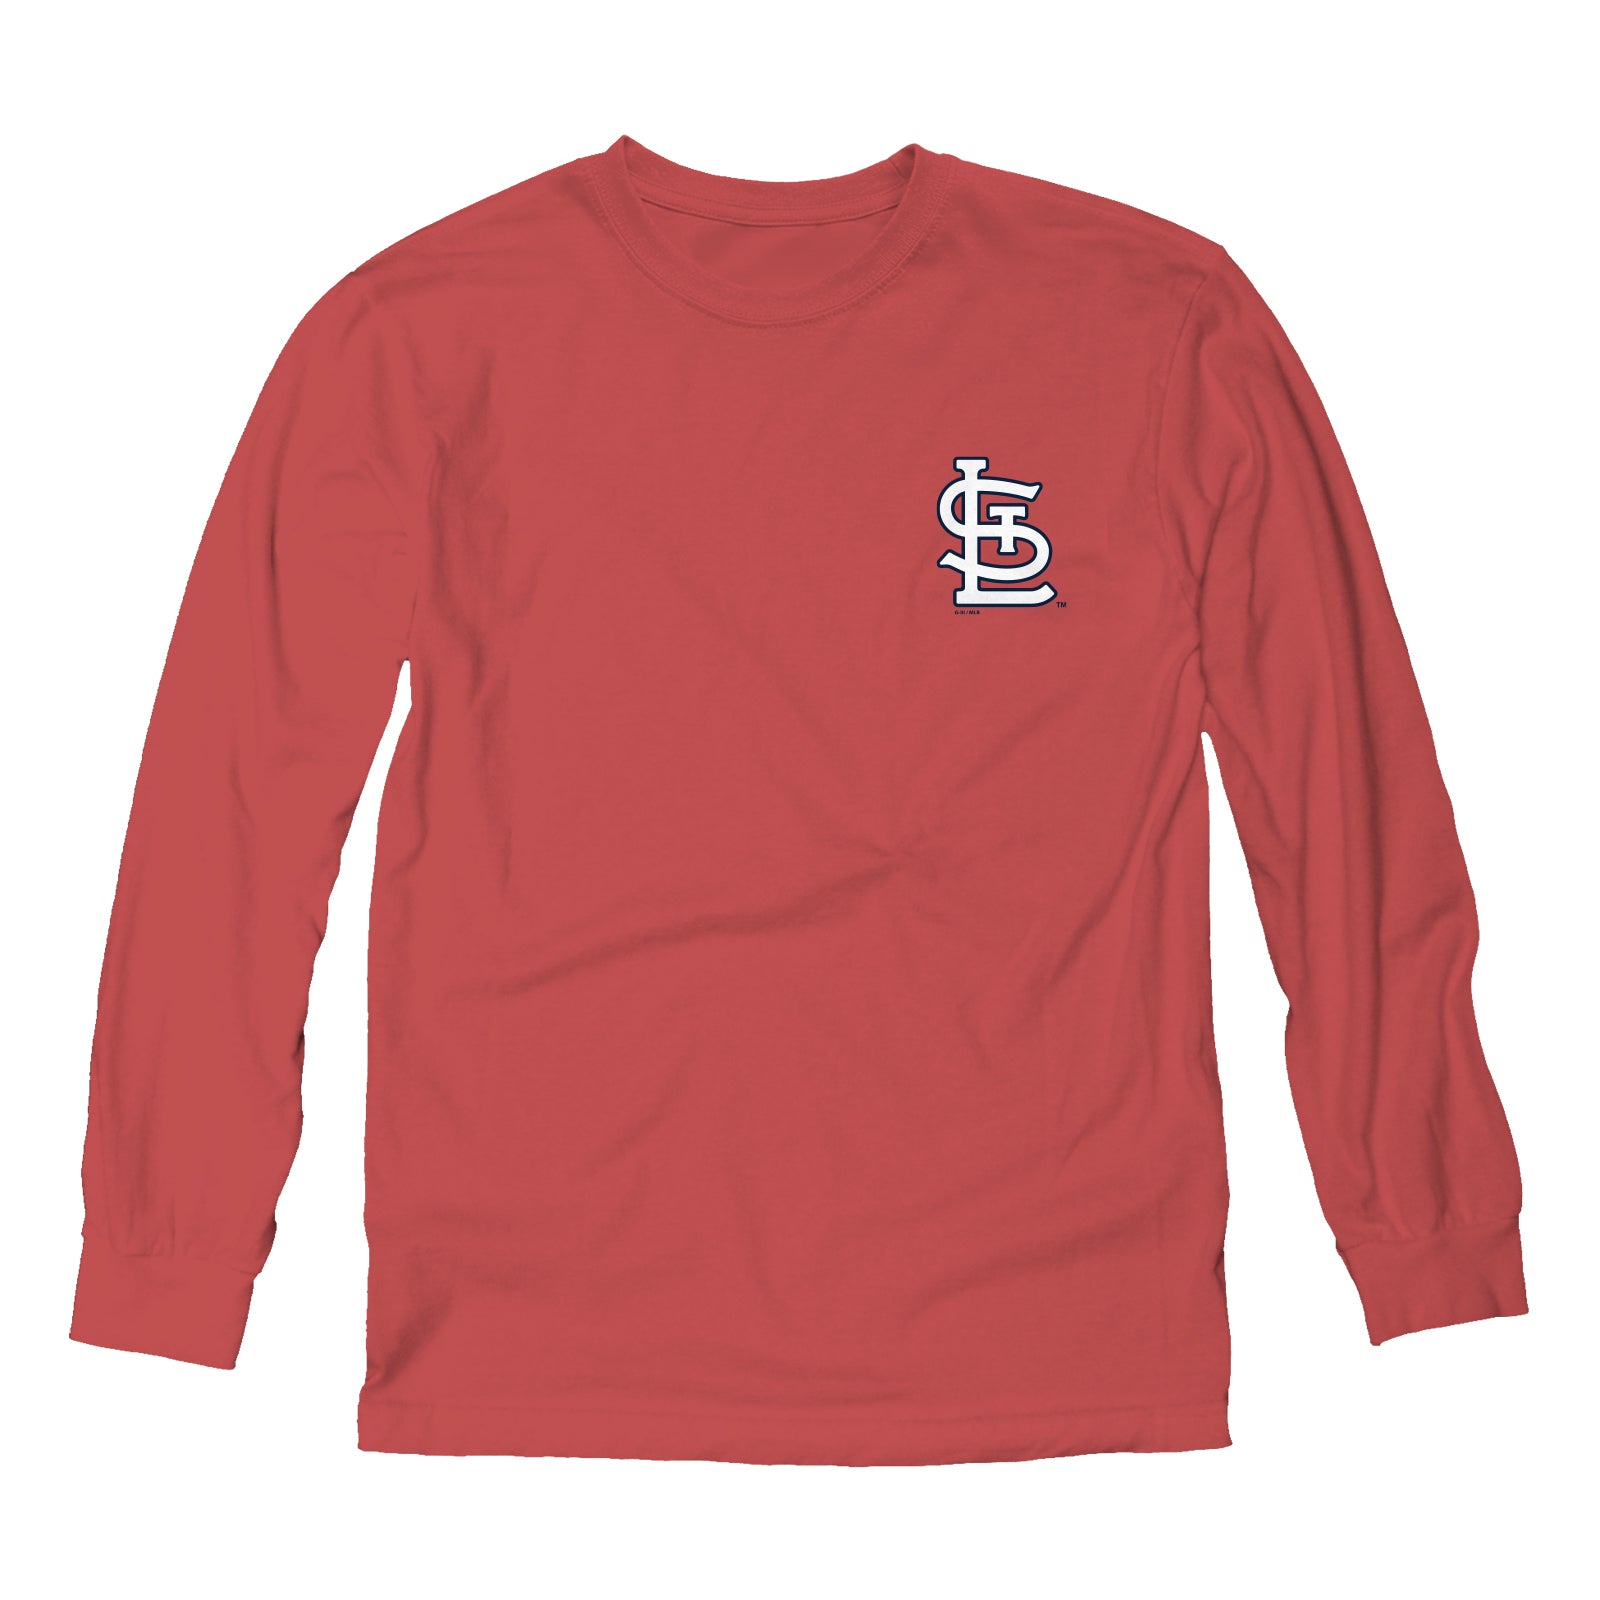 47 St. Louis Cardinals Women's Statement SOA Long Sleeve Graphic T-shirt